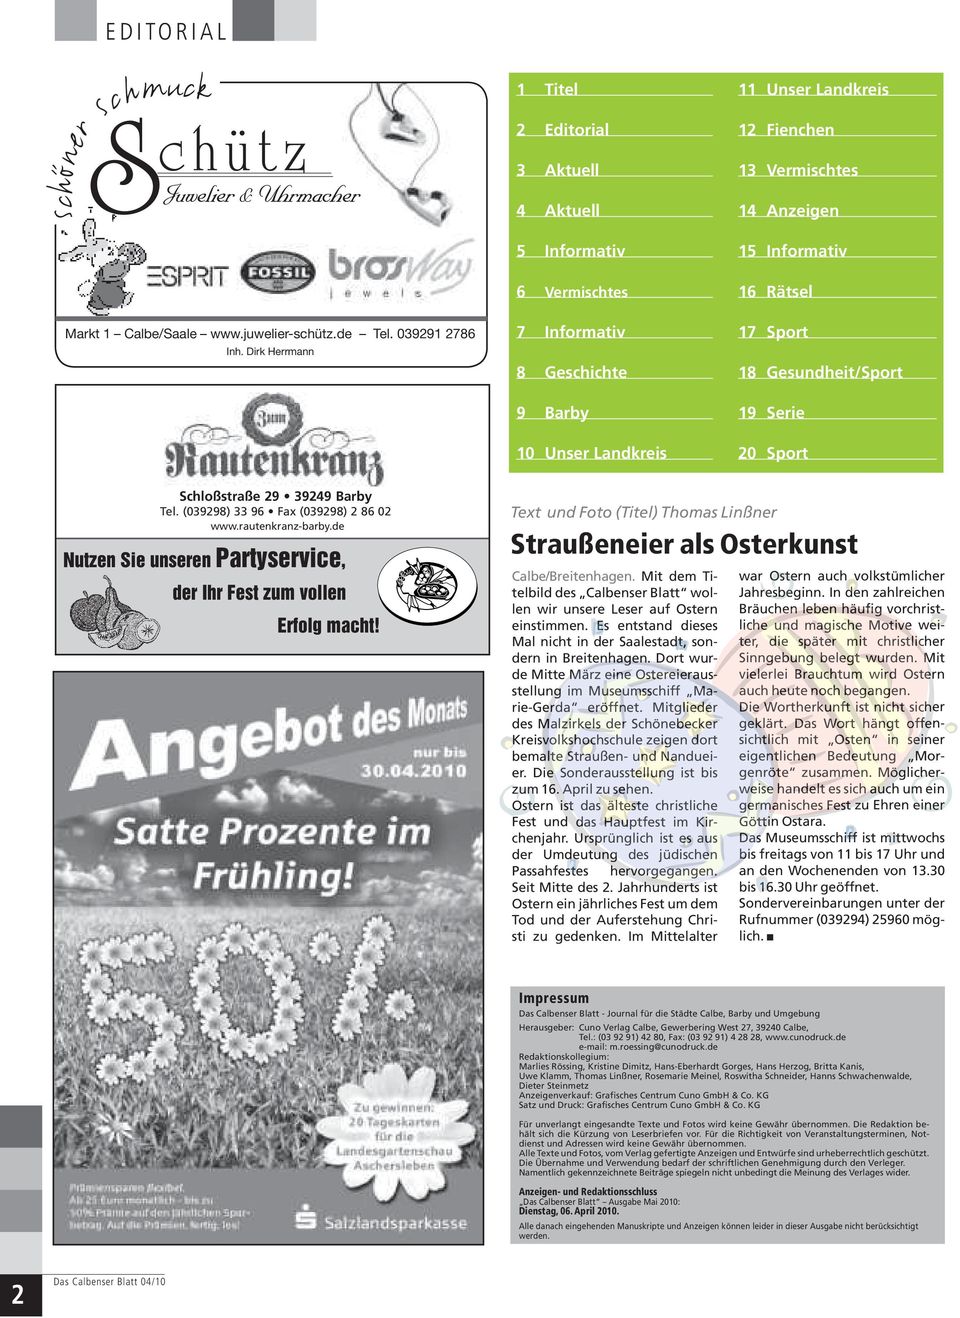 Informativ 16 Rätsel 17 Sport 18 Gesundheit/Sport 19 Serie 20 Sport Schloßstraße 29 39249 Barby Tel. (039298) 33 96 Fax (039298) 2 86 02 www.rautenkranz-barby.